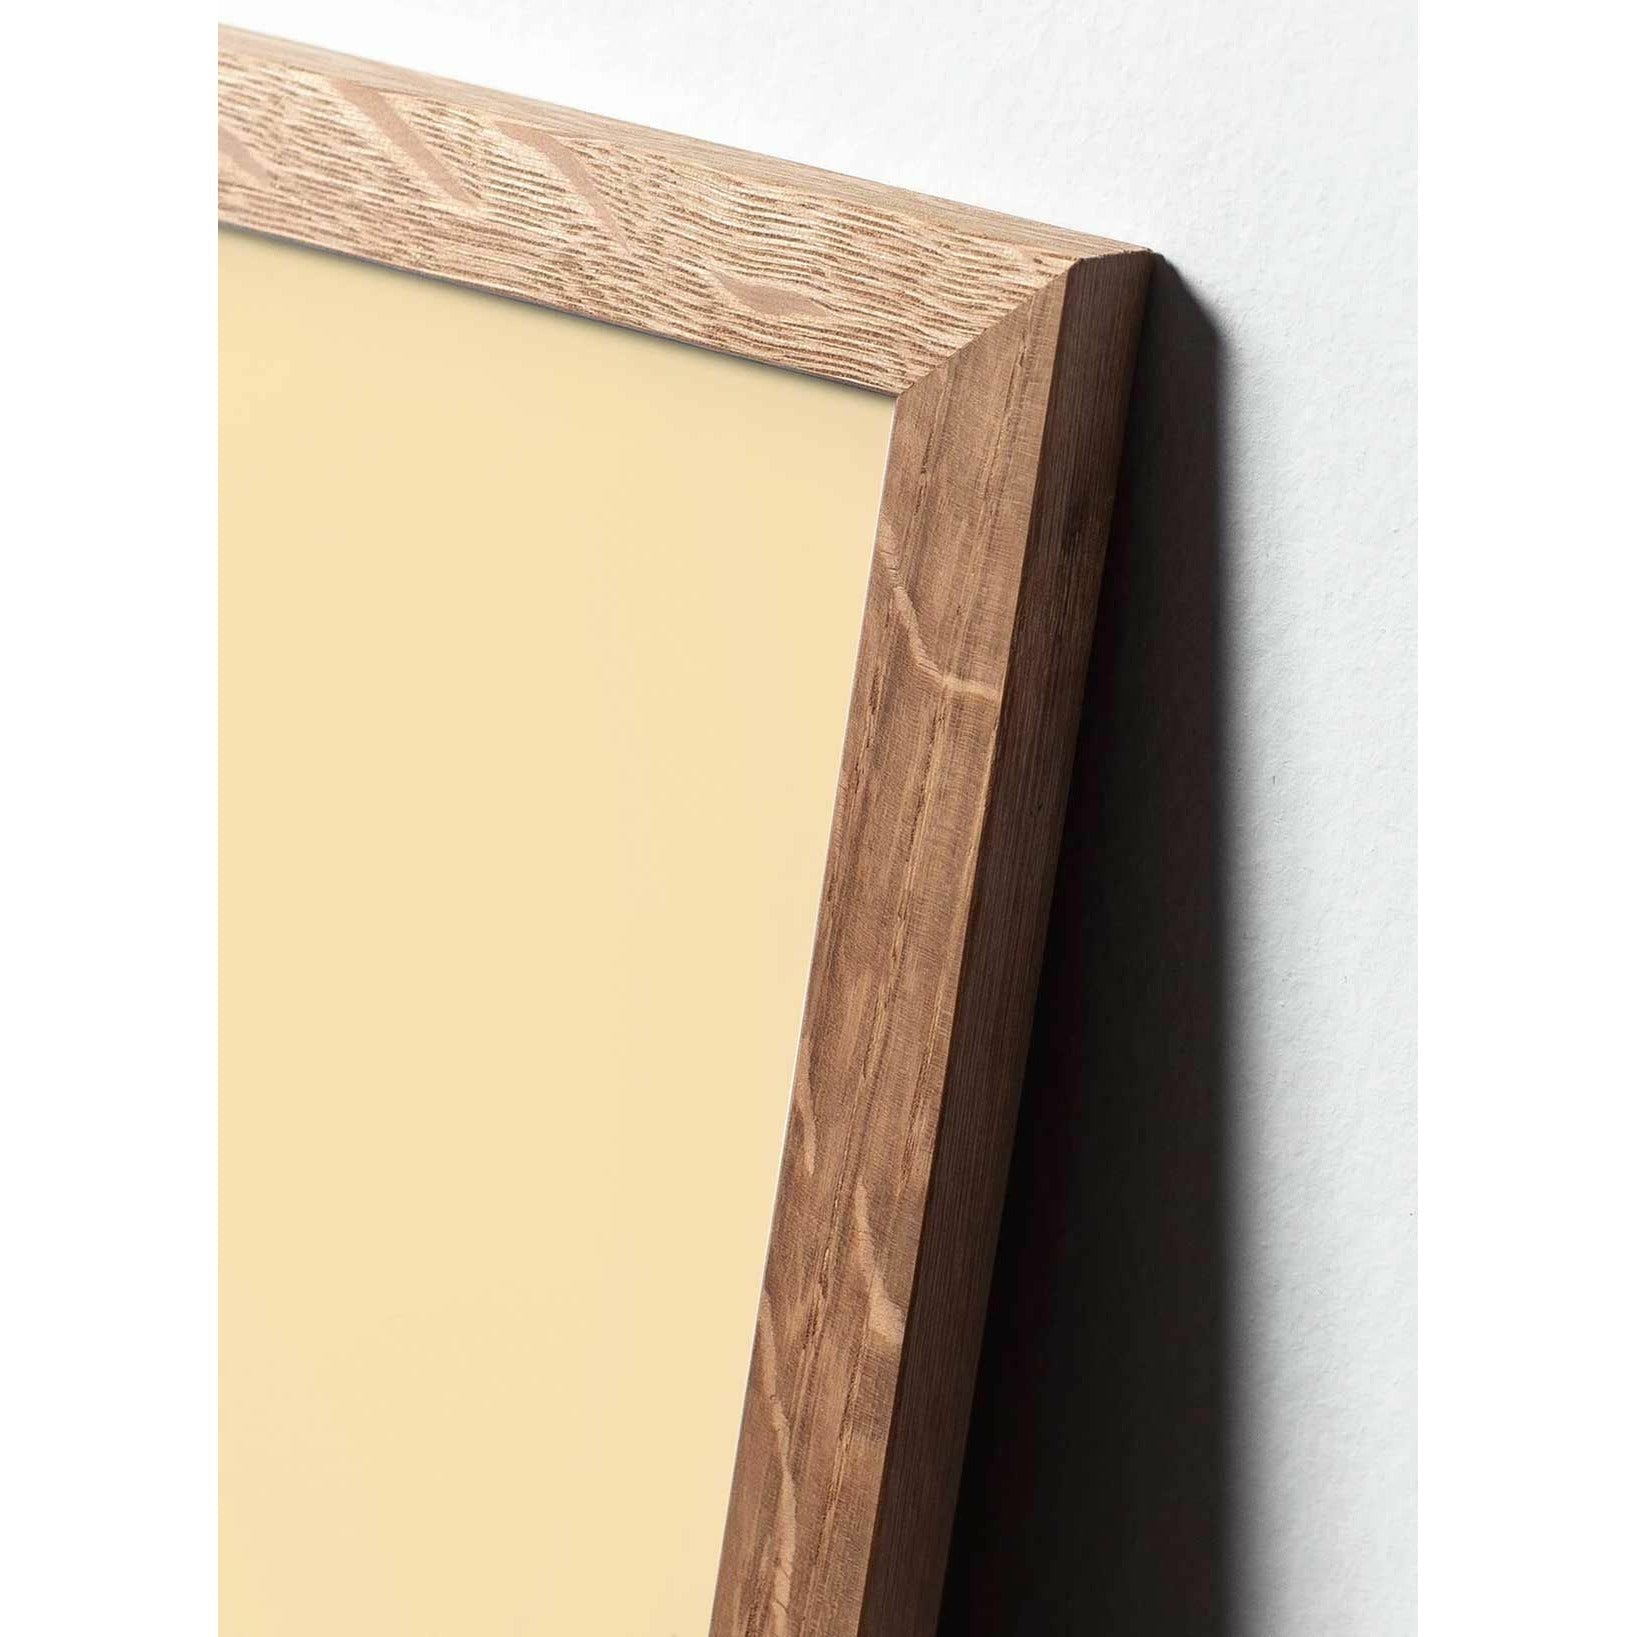 brainchild Pelikan Classic Poster, frame gemaakt van licht hout 50x70 cm, zwarte achtergrond